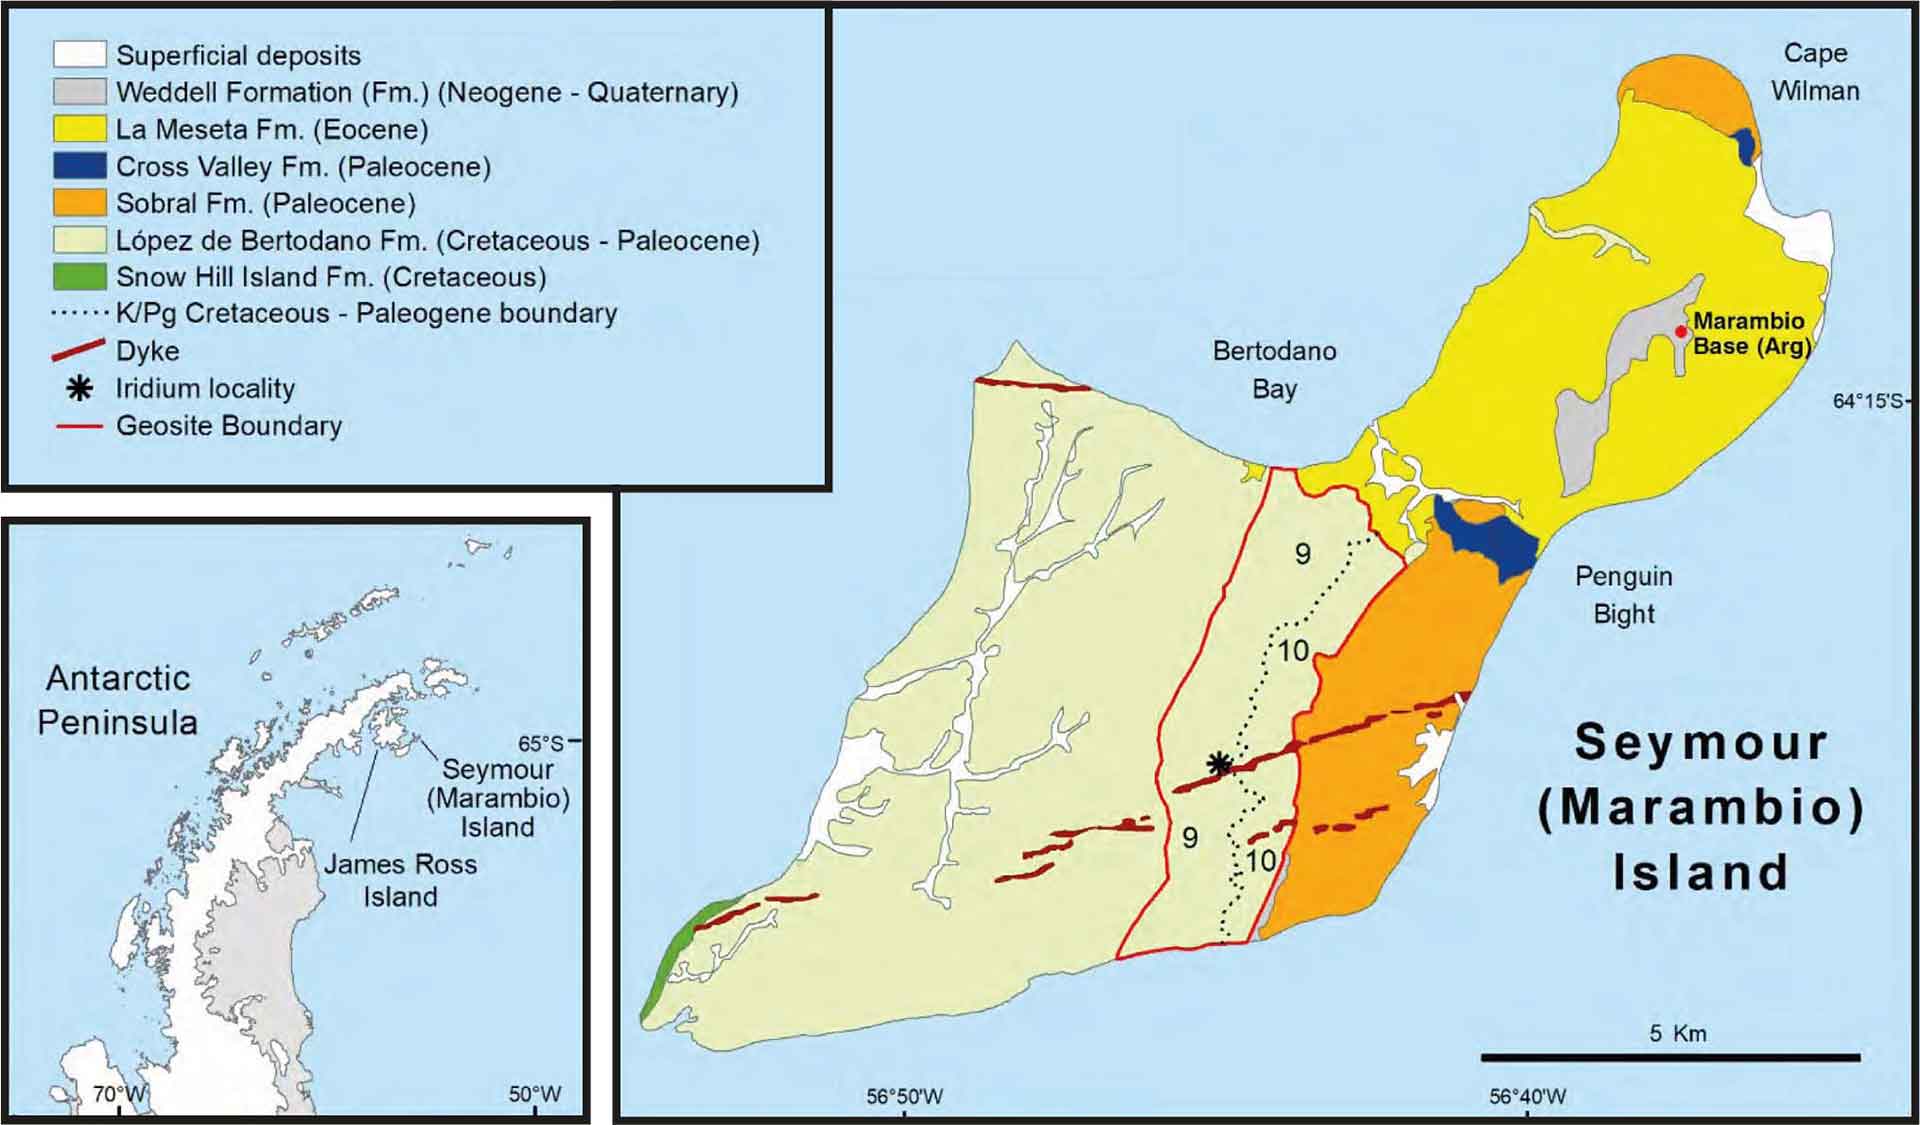 Simplified geological map of Seymour (Marambio) Island